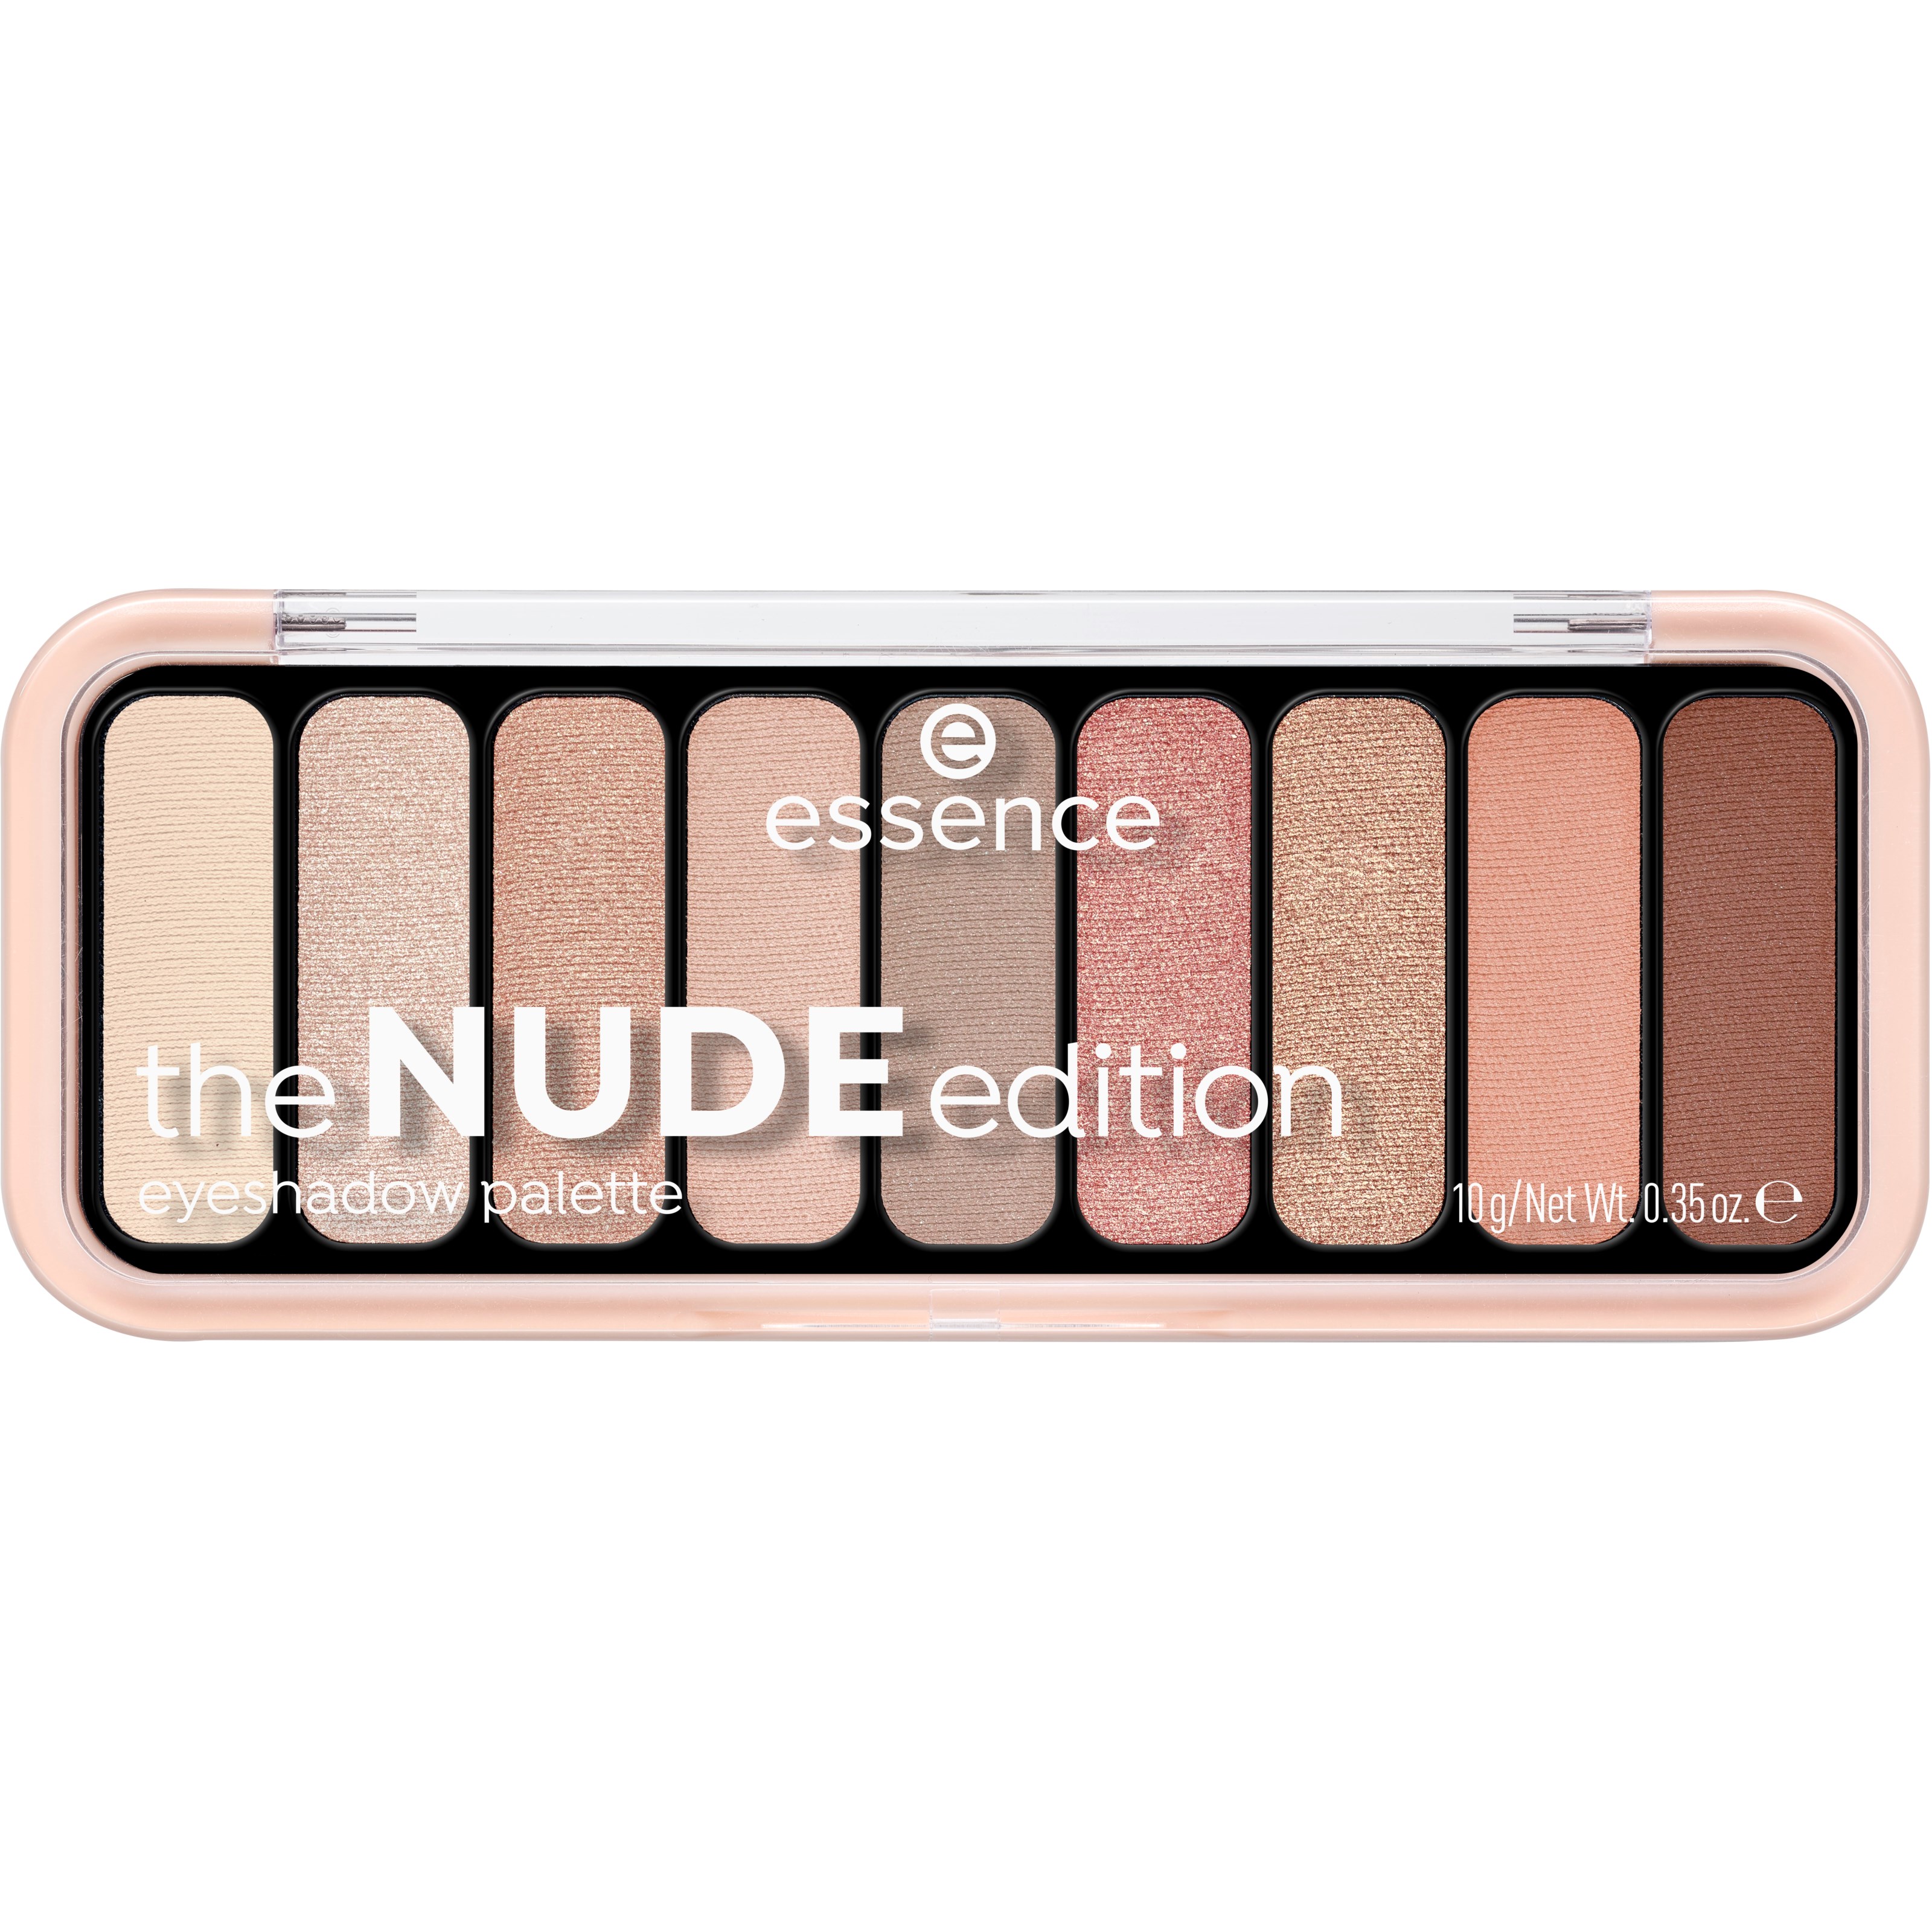 Bilde av Essence The Nude Edition Eyeshadow Palette